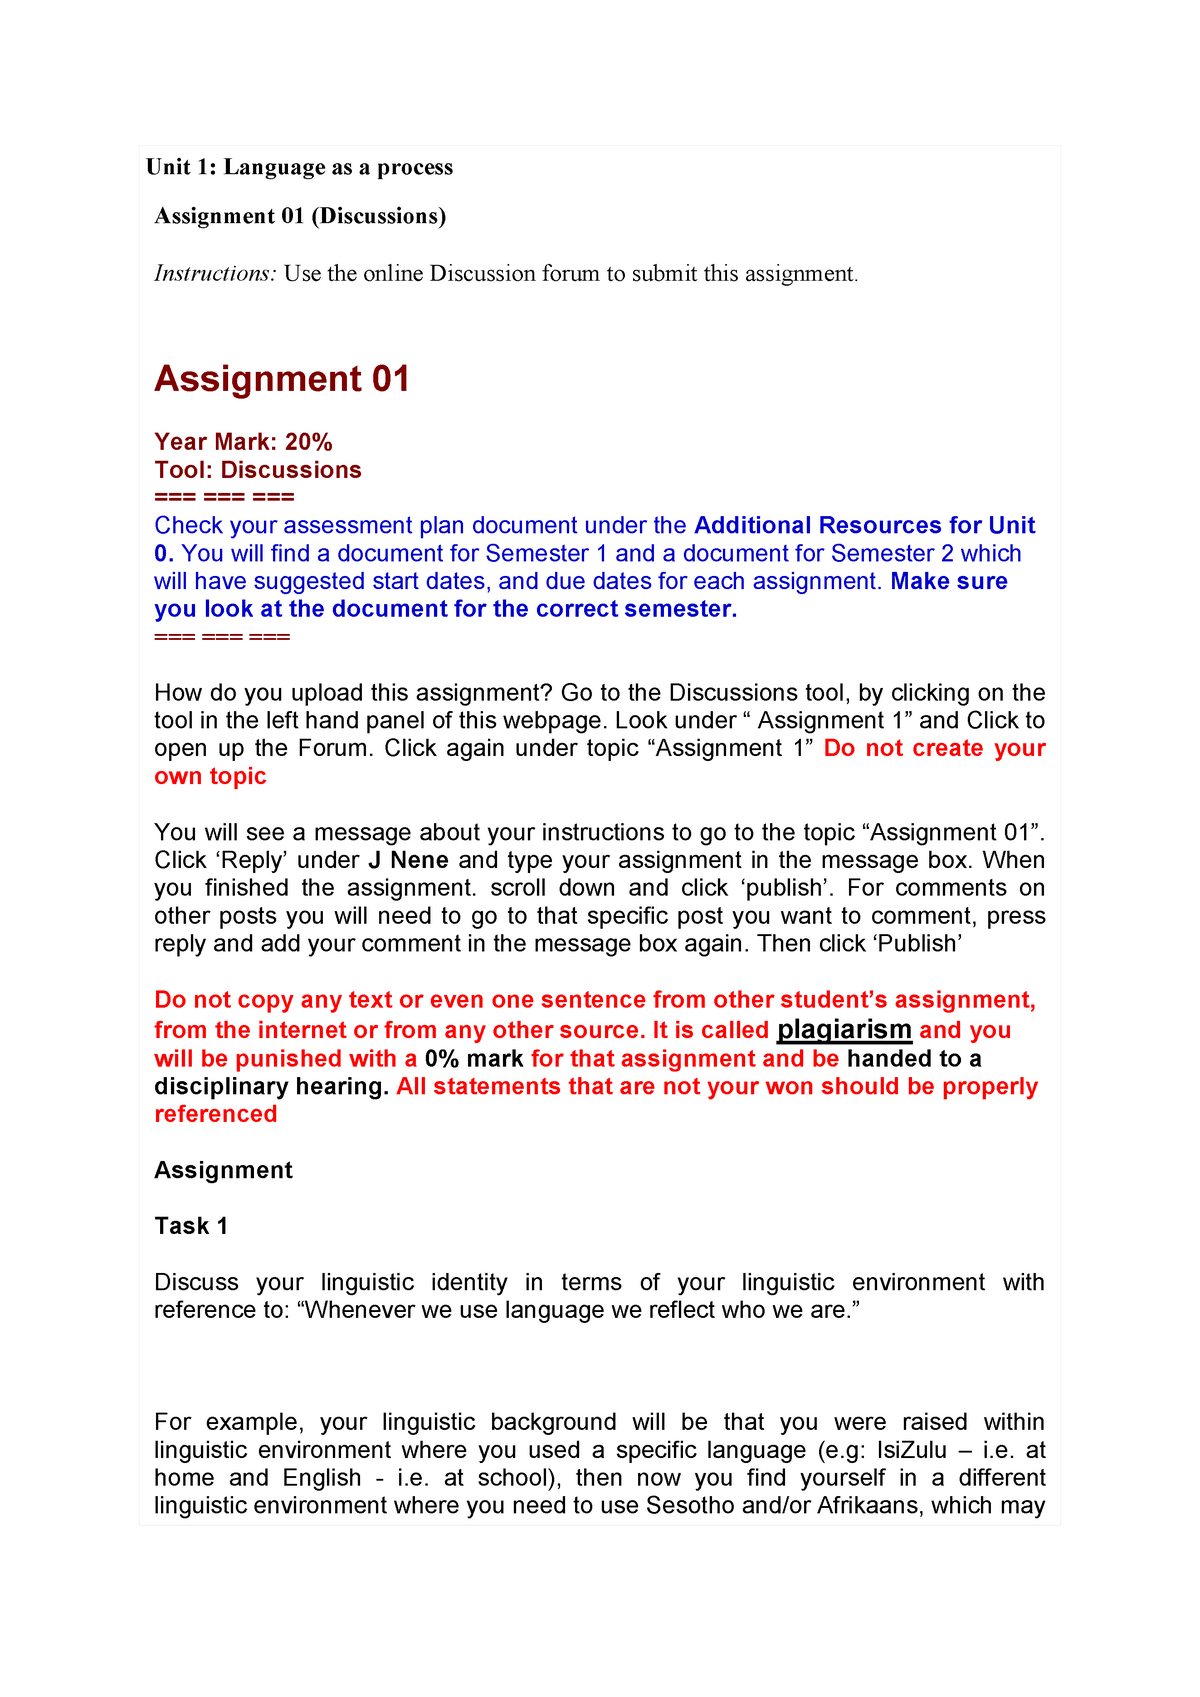 adb1501 assignment 6 answers